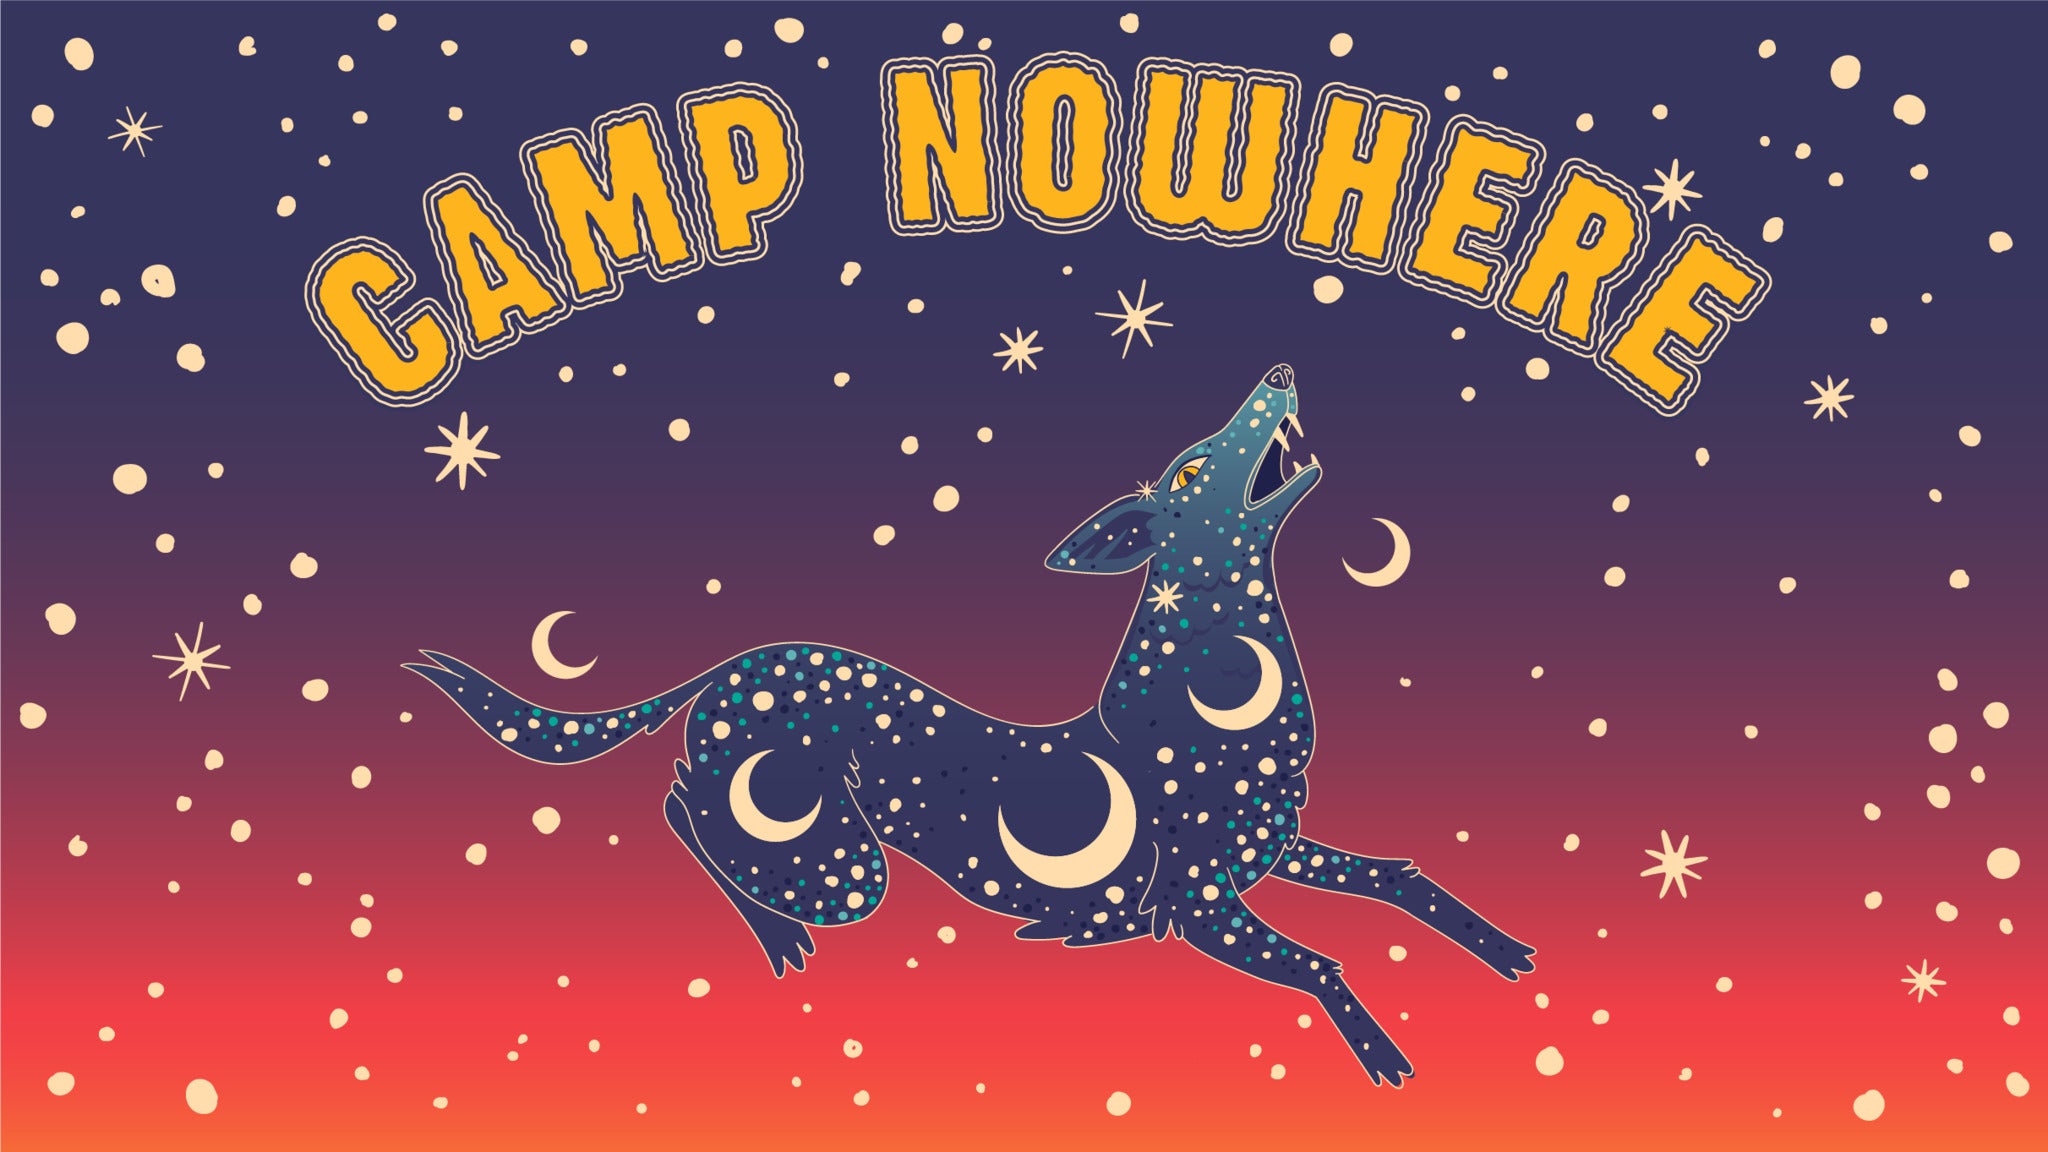 Camp Nowhere 2022: Porter Robinson, Lane 8, Nora En Pure & Fletcher presale password